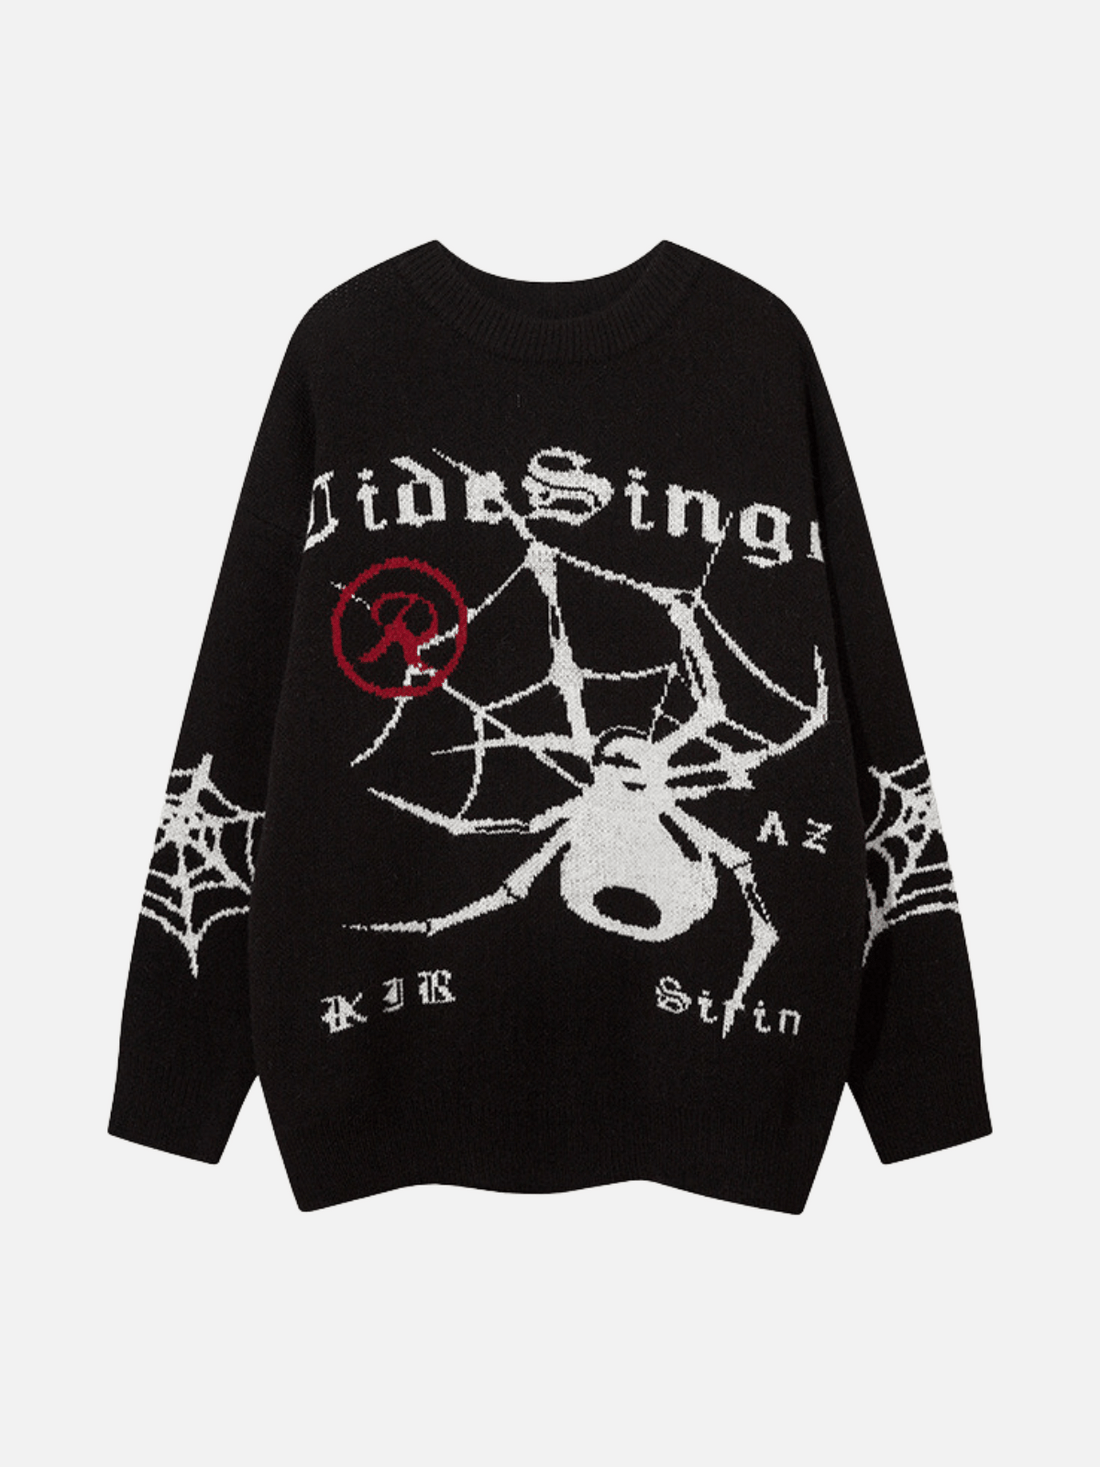 SIDESING - Oversized Graphic Sweater Black | Teenwear.eu